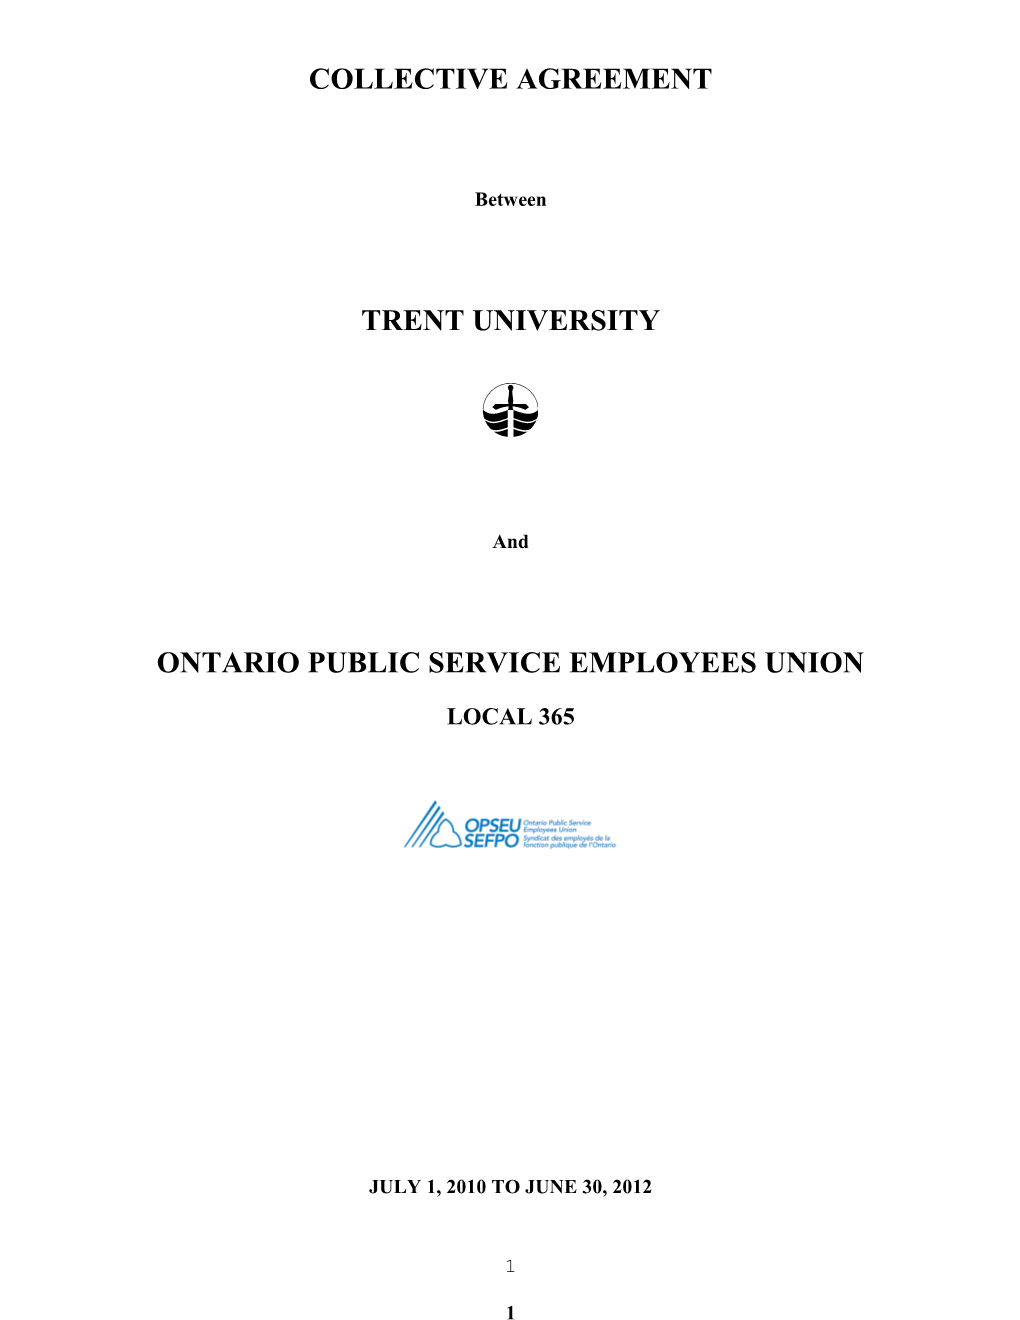 Ontario Public Service Employees Union